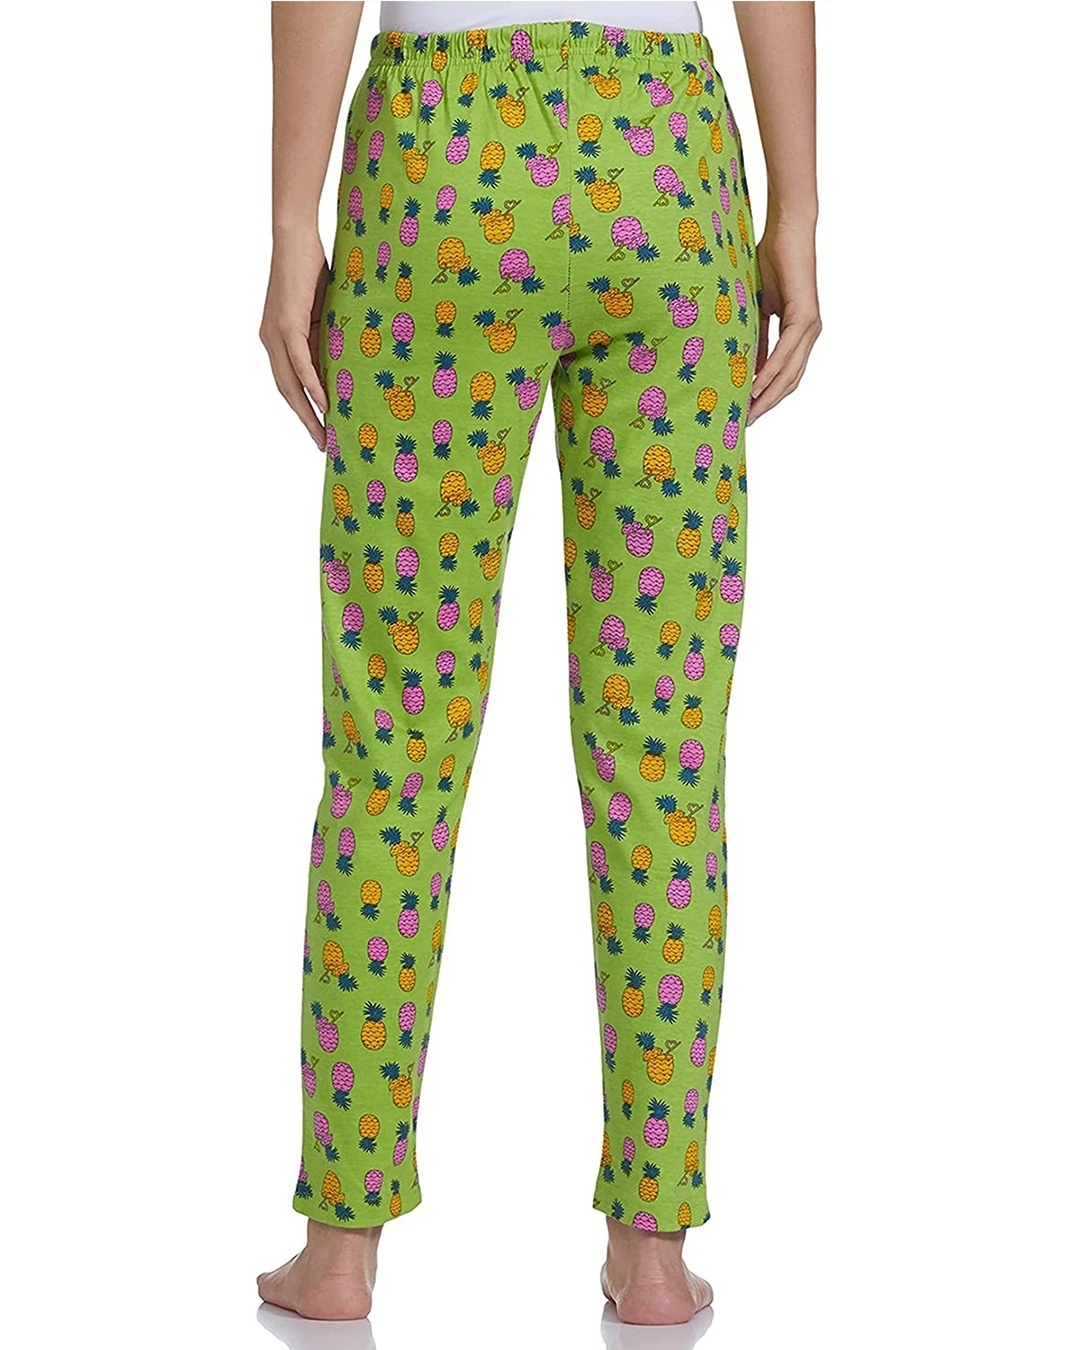 Shop Women's Green All Over Pineapple Printed Cotton Pyjamas-Design